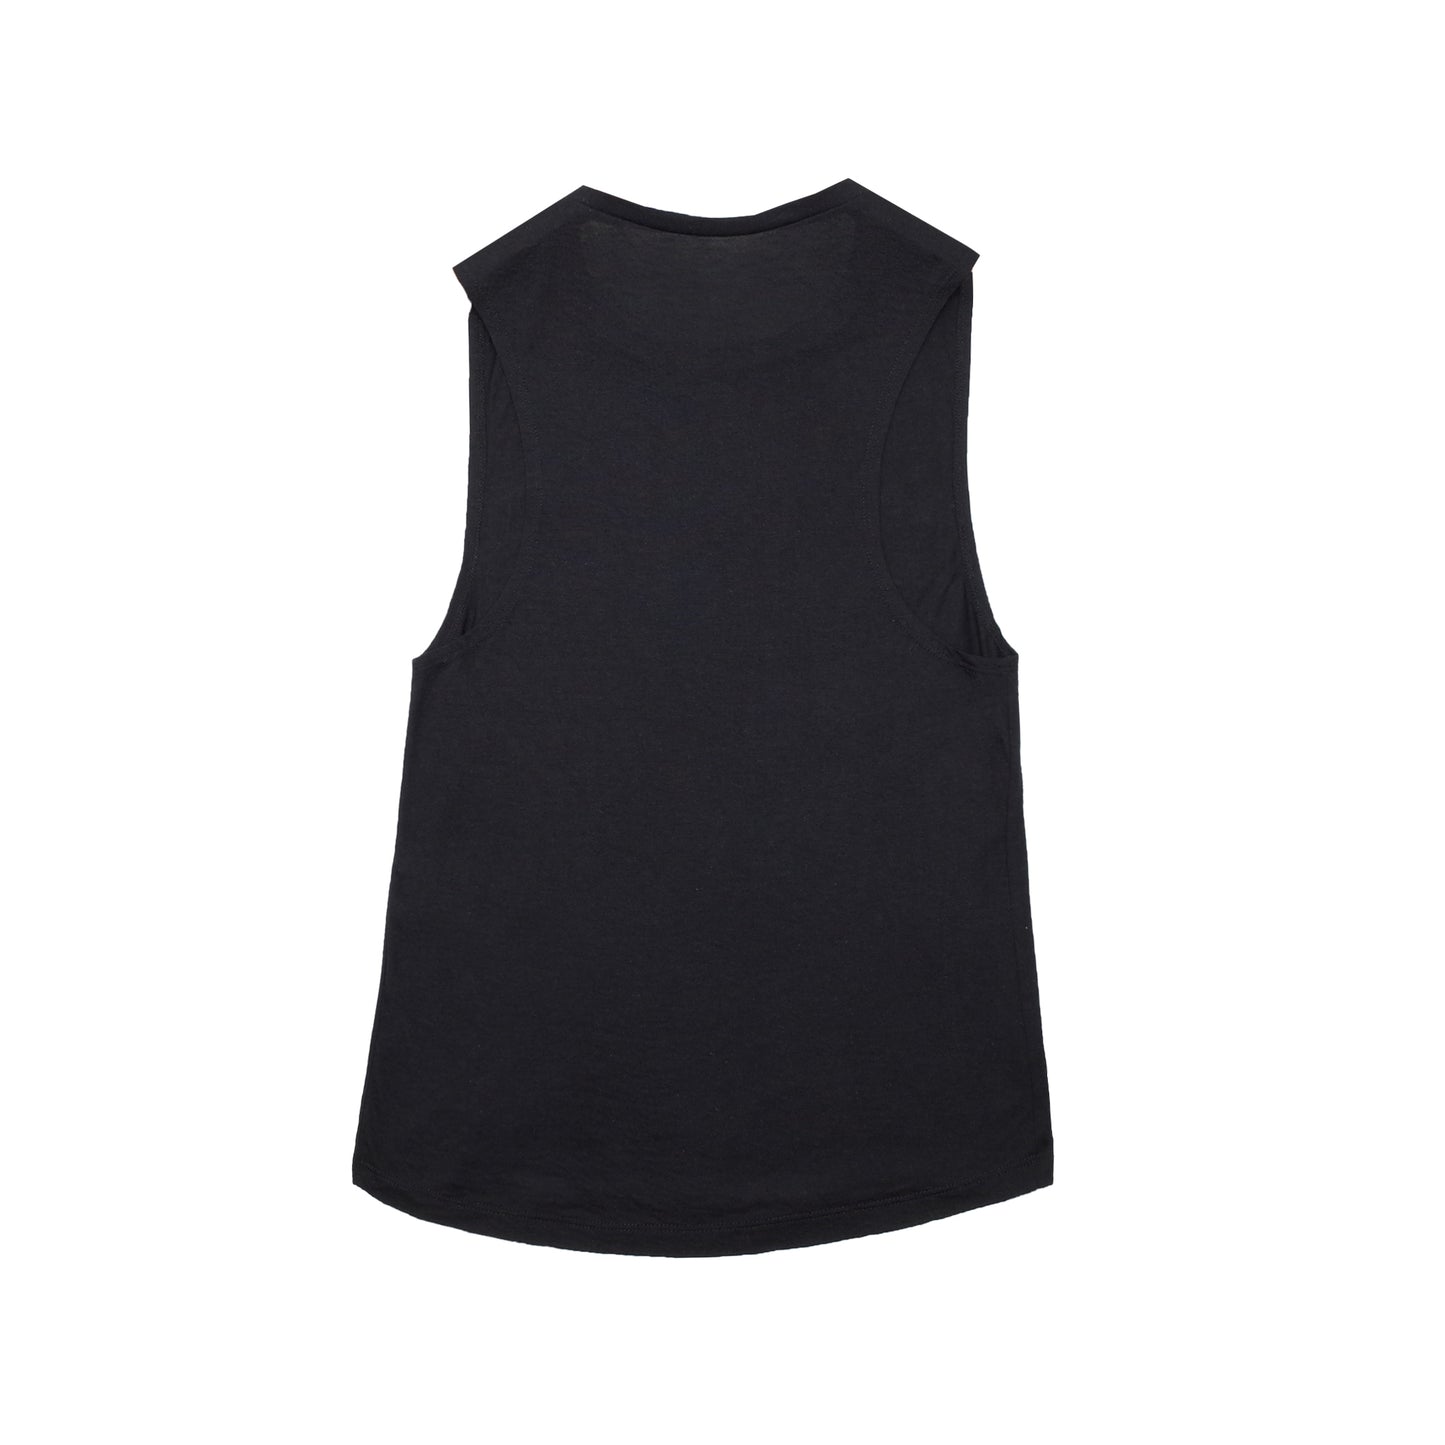 TDE New Classic Woman's Sleeveless T-Shirt (Black)